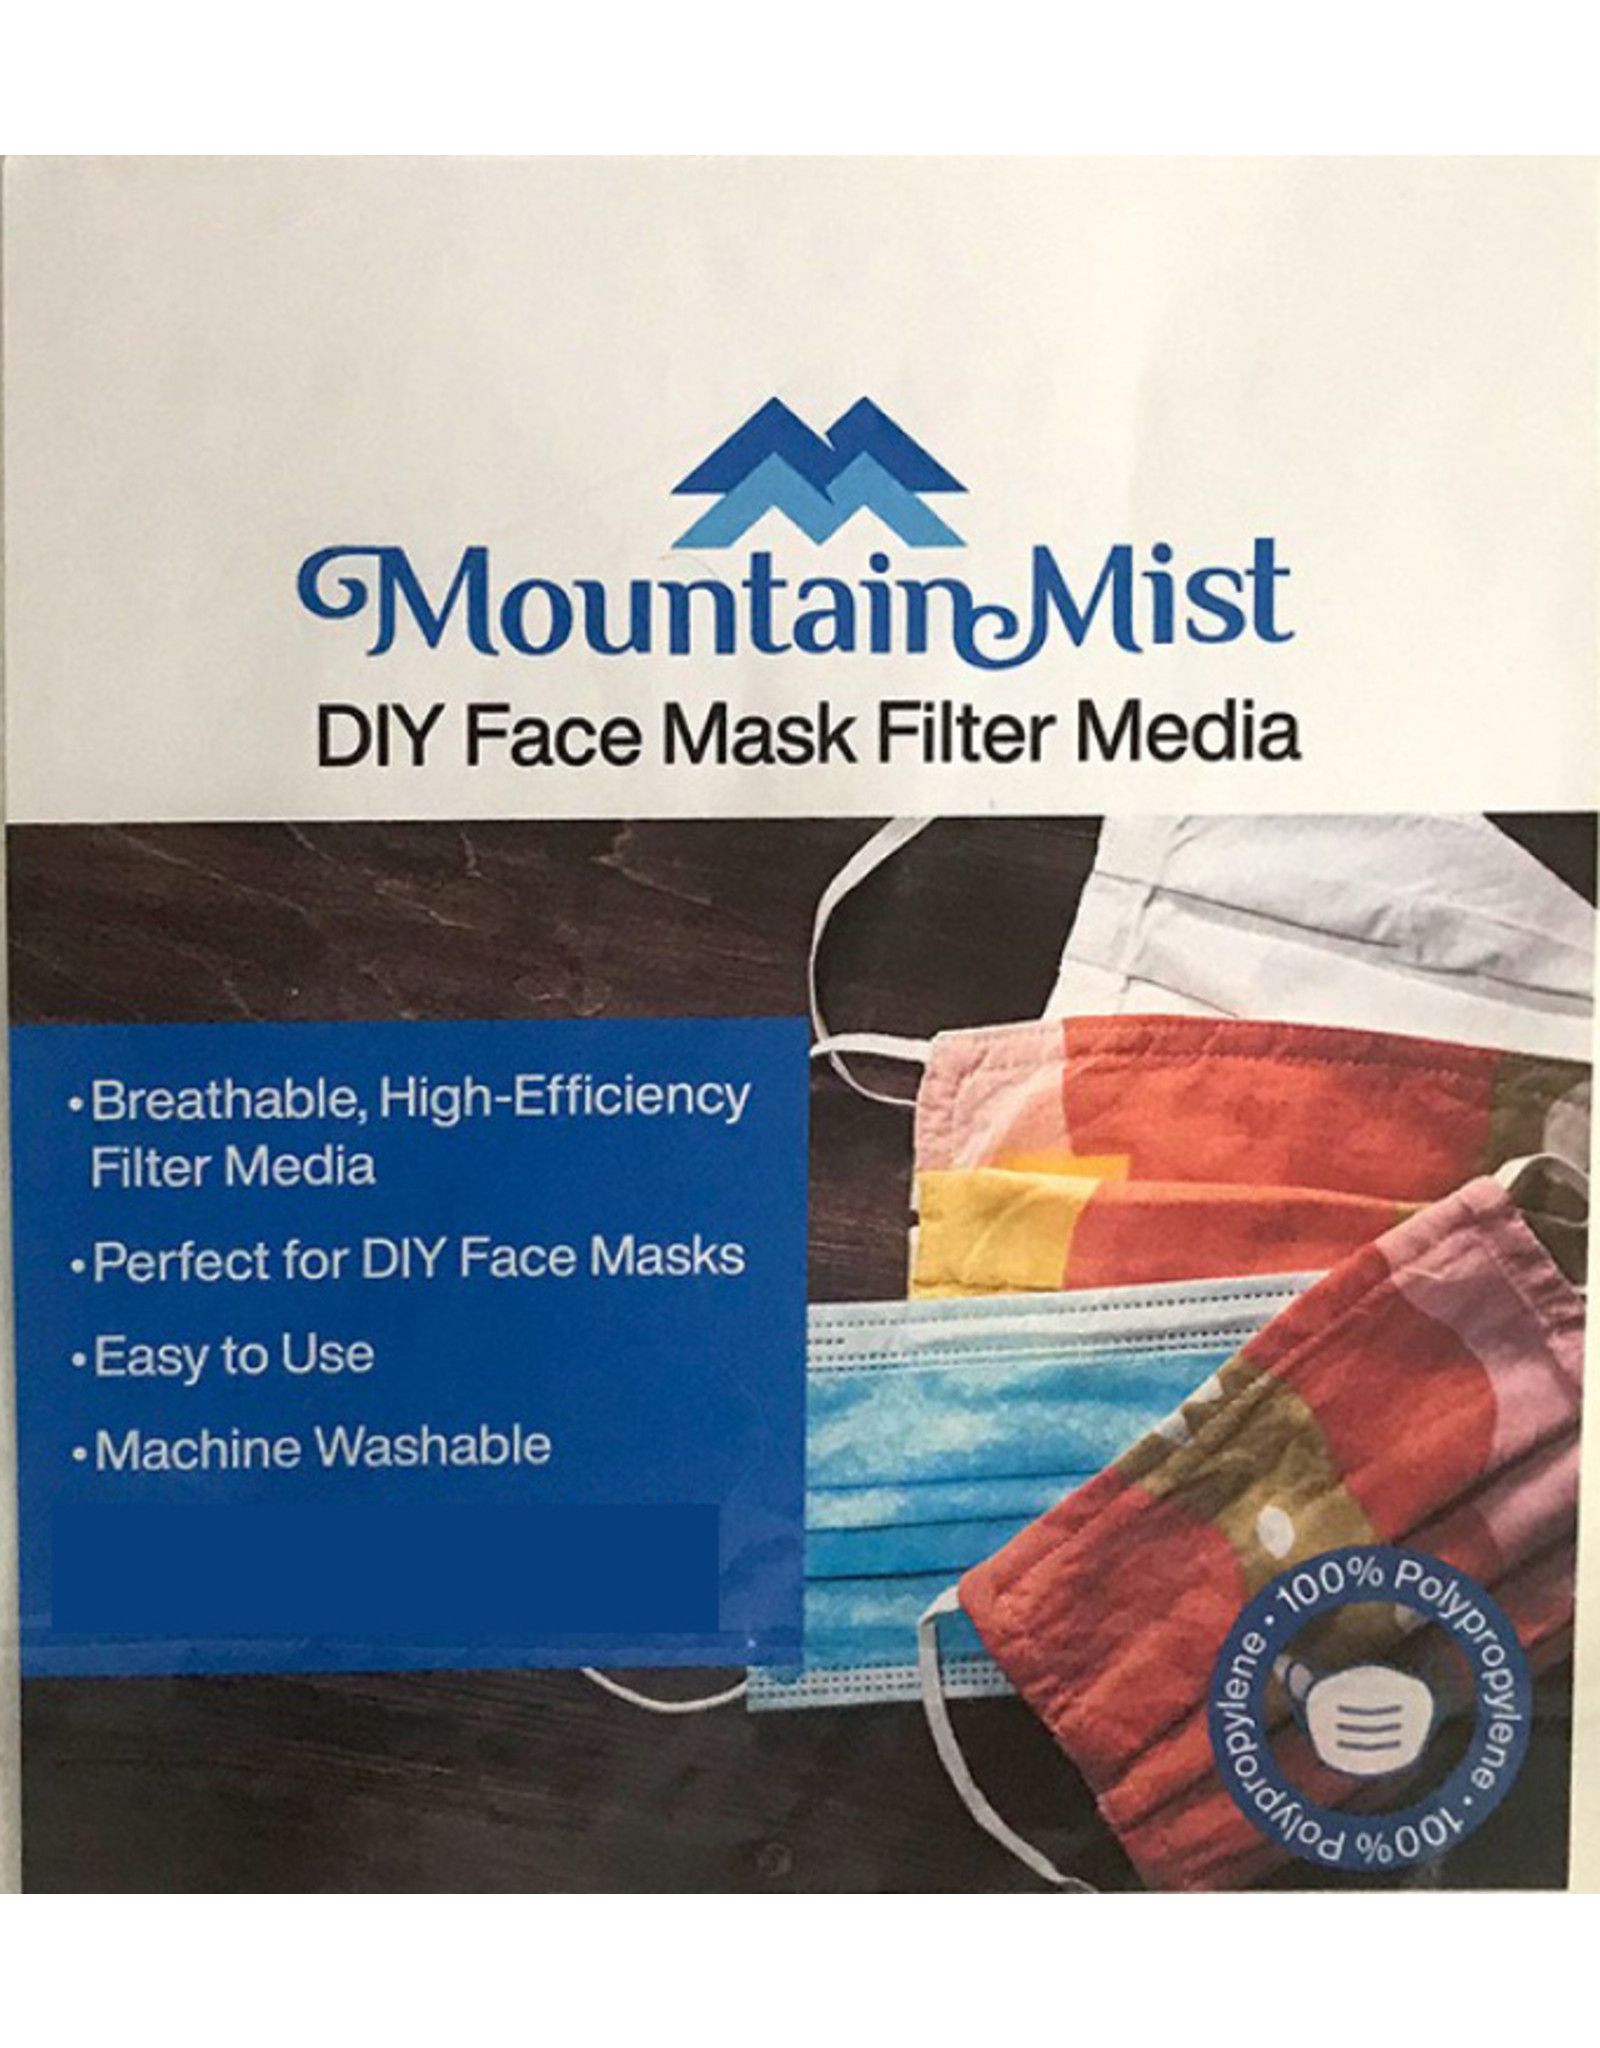 Diversen Face mask Filter media